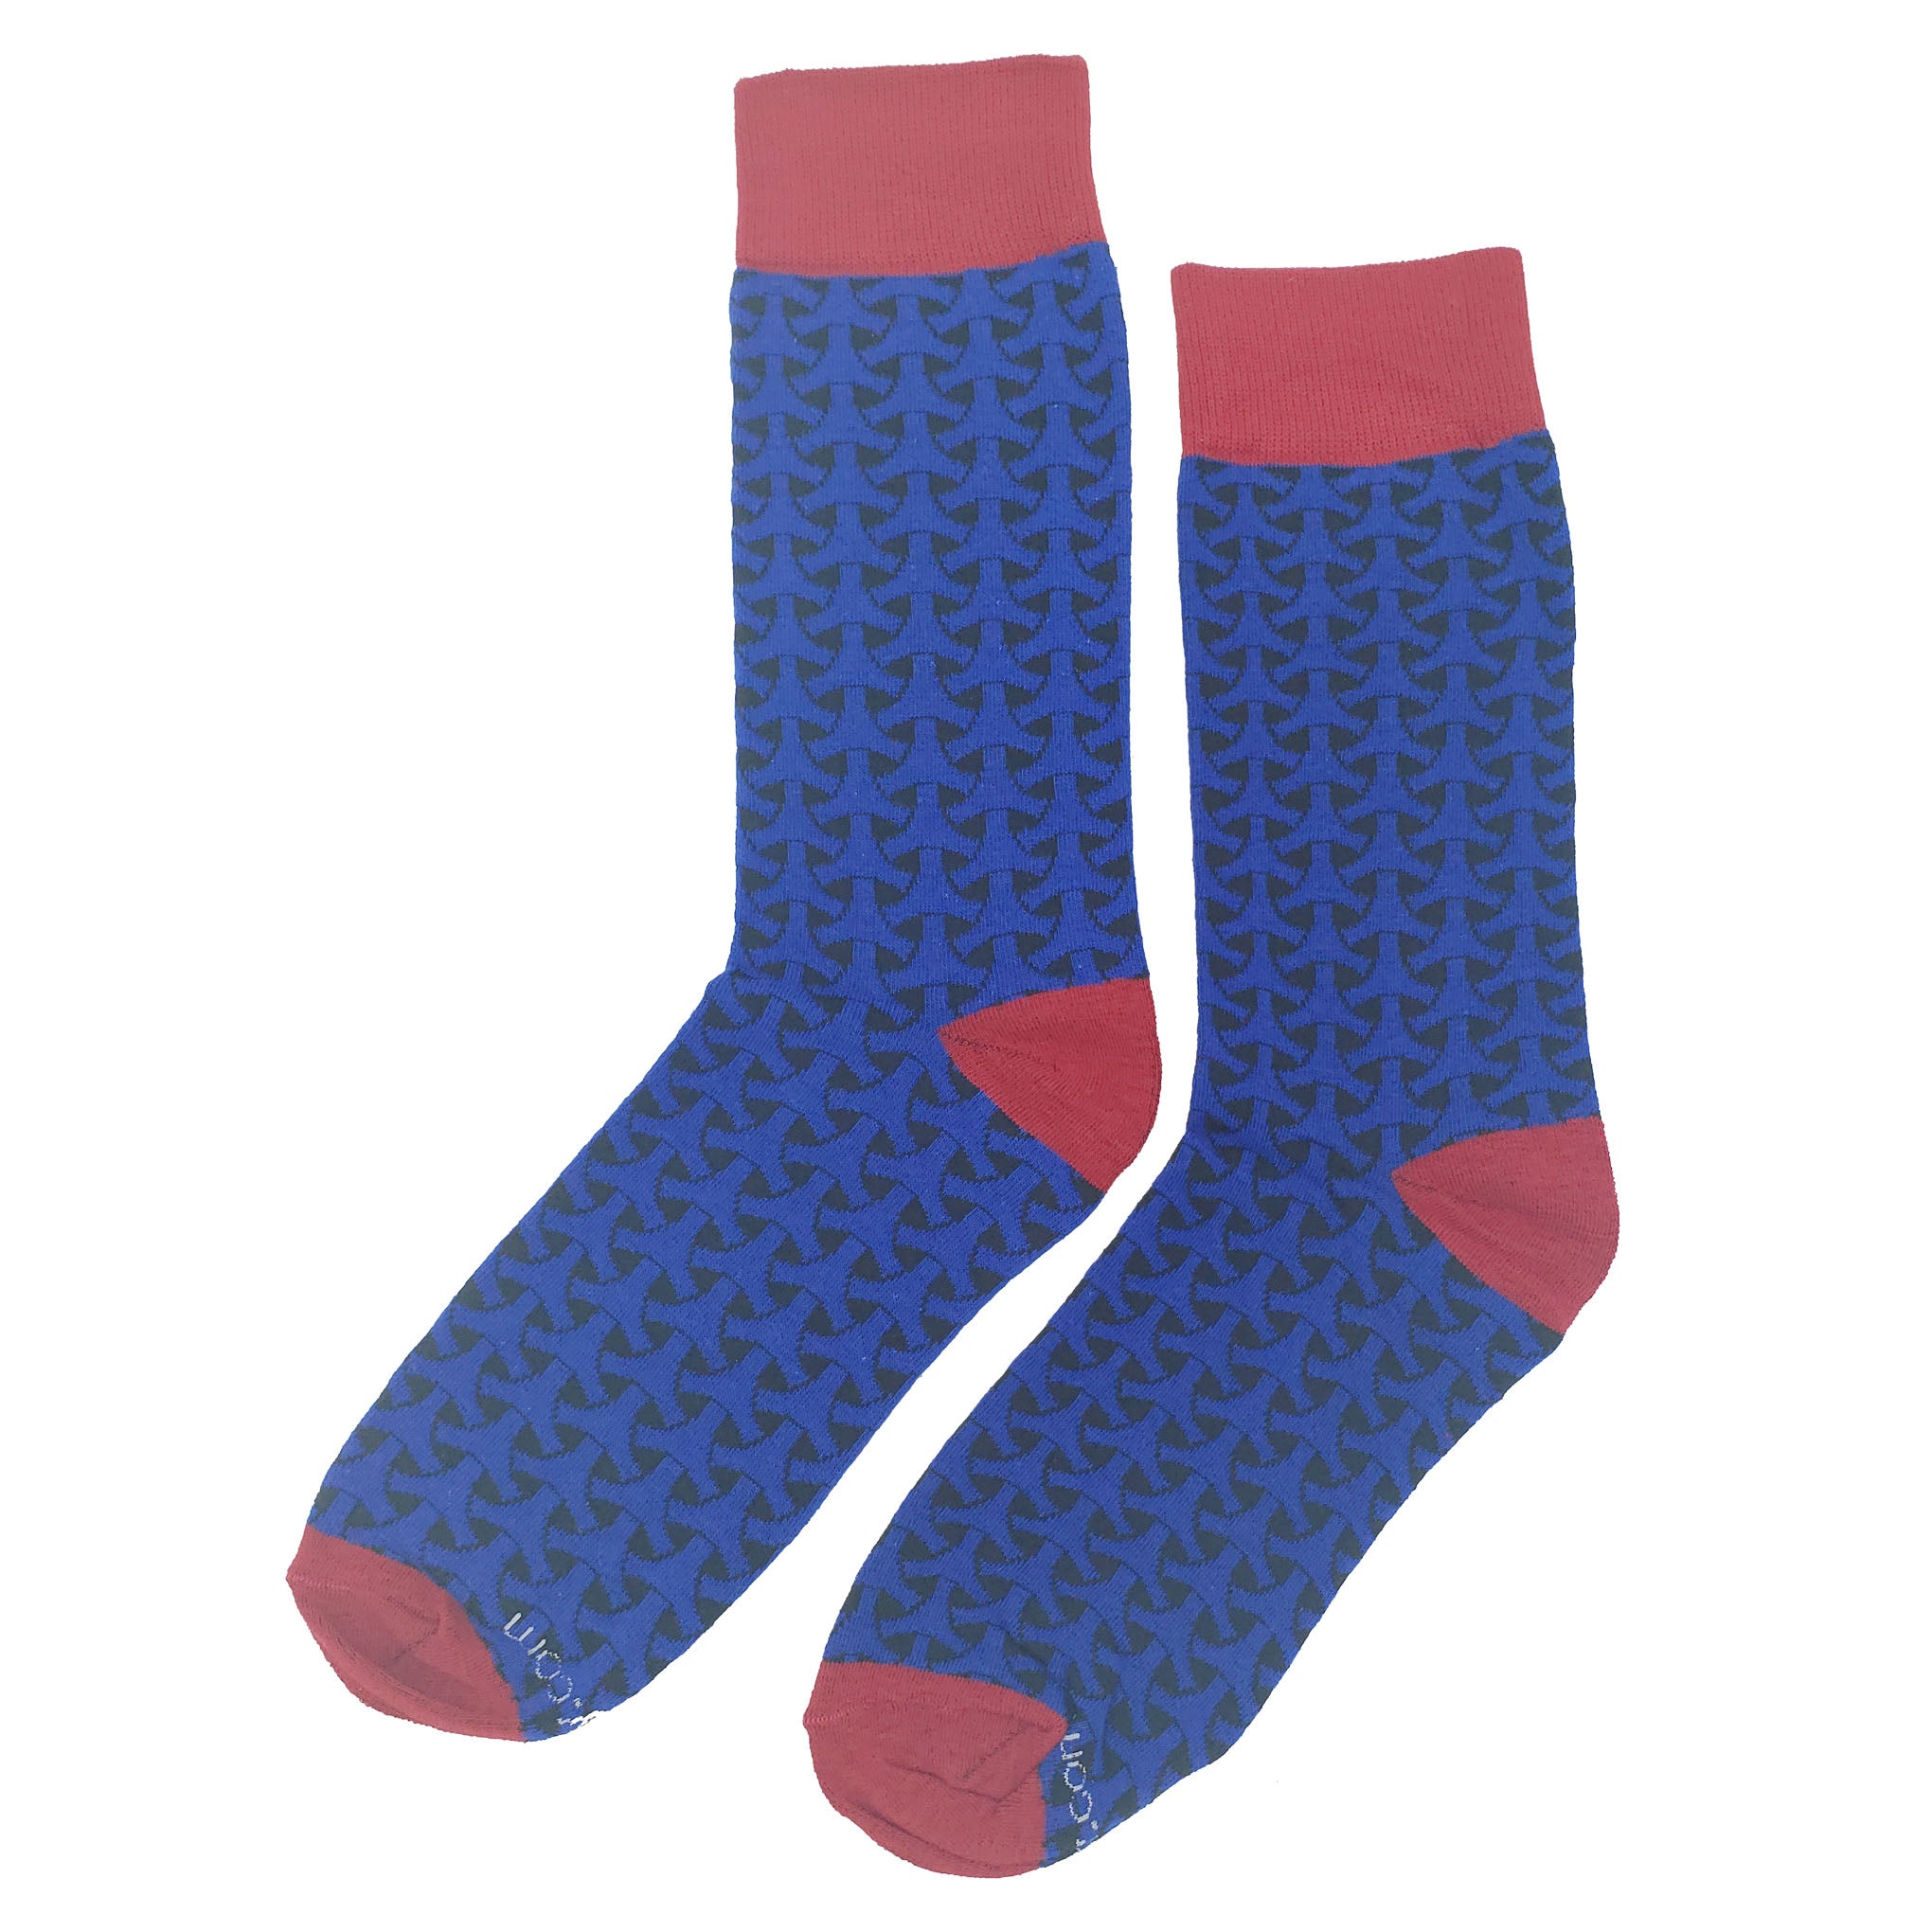 Blue Hex Socks - Fun and Crazy Socks at Sockfly.com